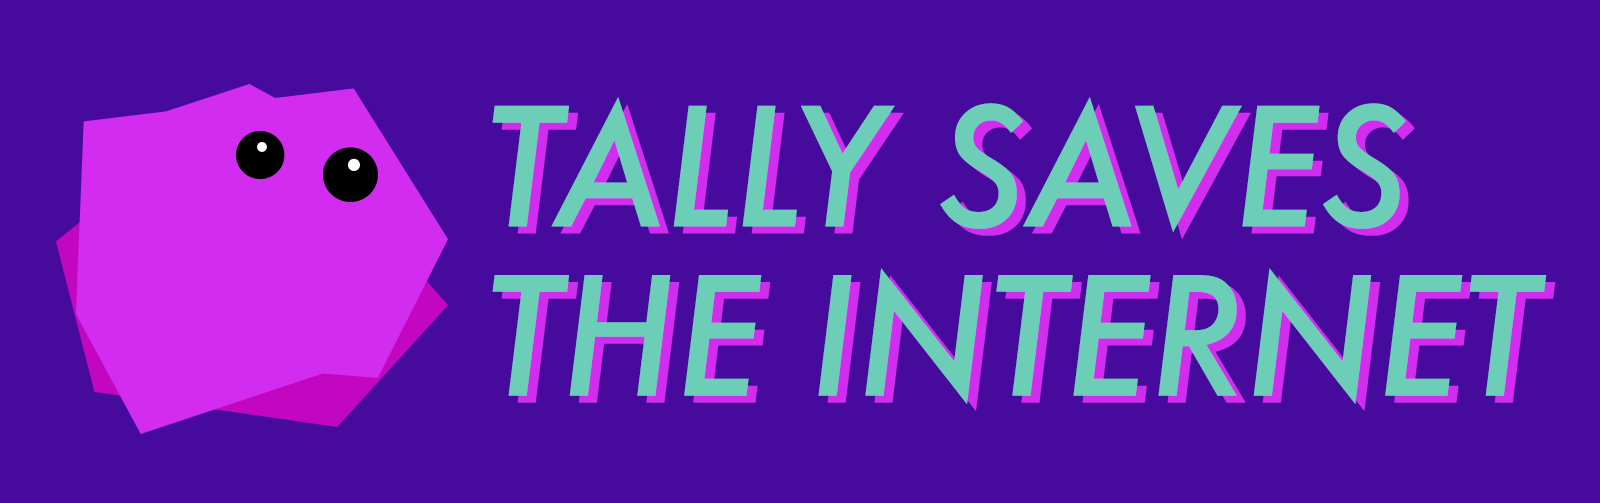 Tally Saves the Internet press image